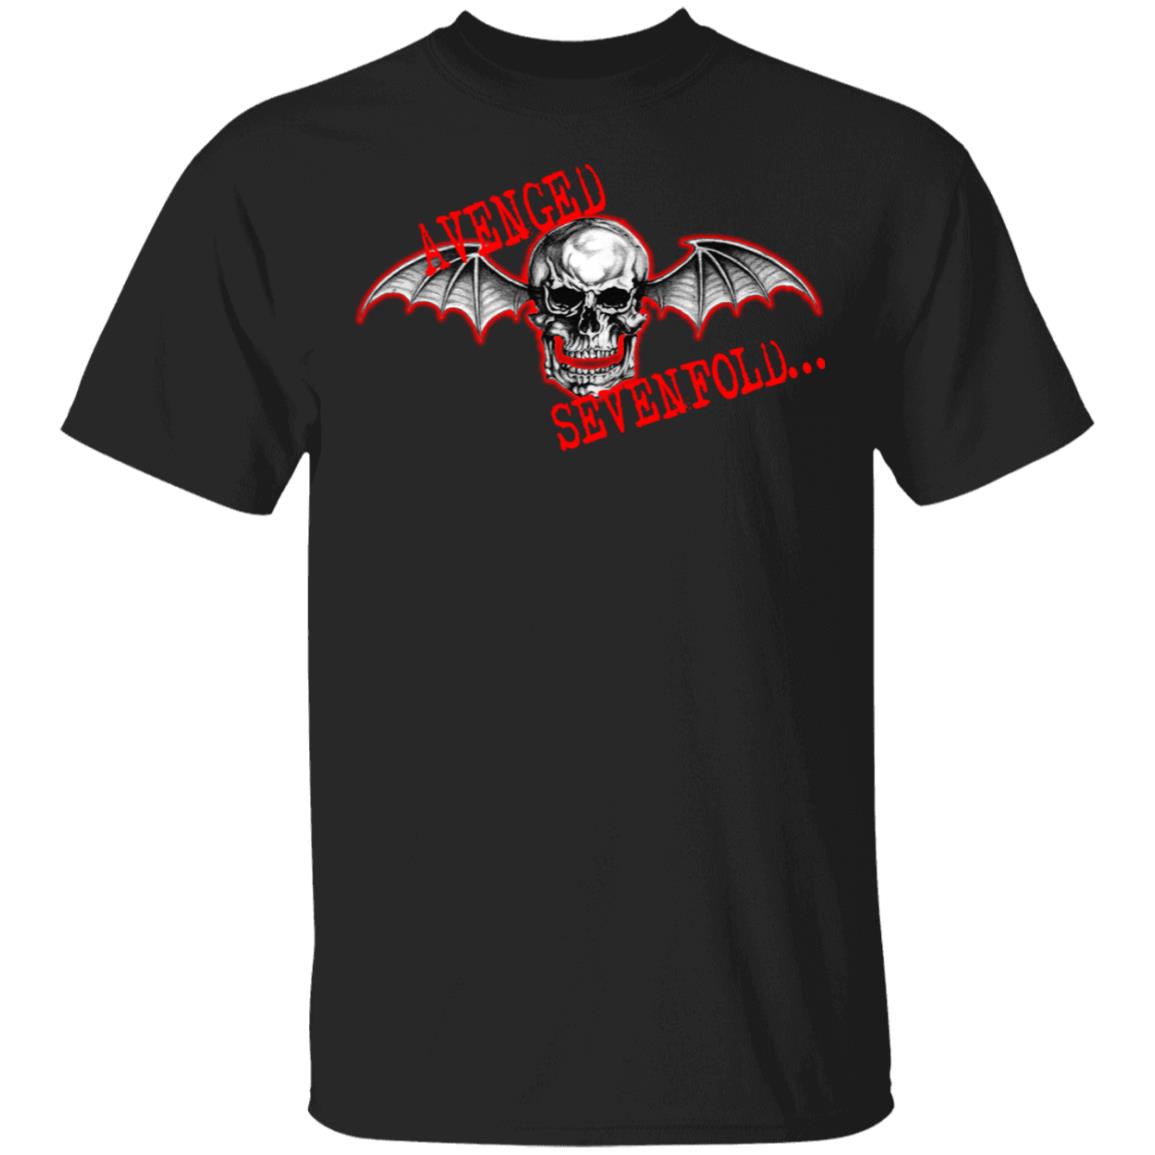 Avenged Sevenfold Merch Bat Death T-Shirt
#AvengedSevenfoldMerch #BatDeathTShirt #BandMerch #RockFashion #MetalFashion #MusicMerch #GraphicTee #ConcertWear #AlternativeFashion #BandTee #RockStyle #TipateeMerch

tipatee.com/product/avenge…